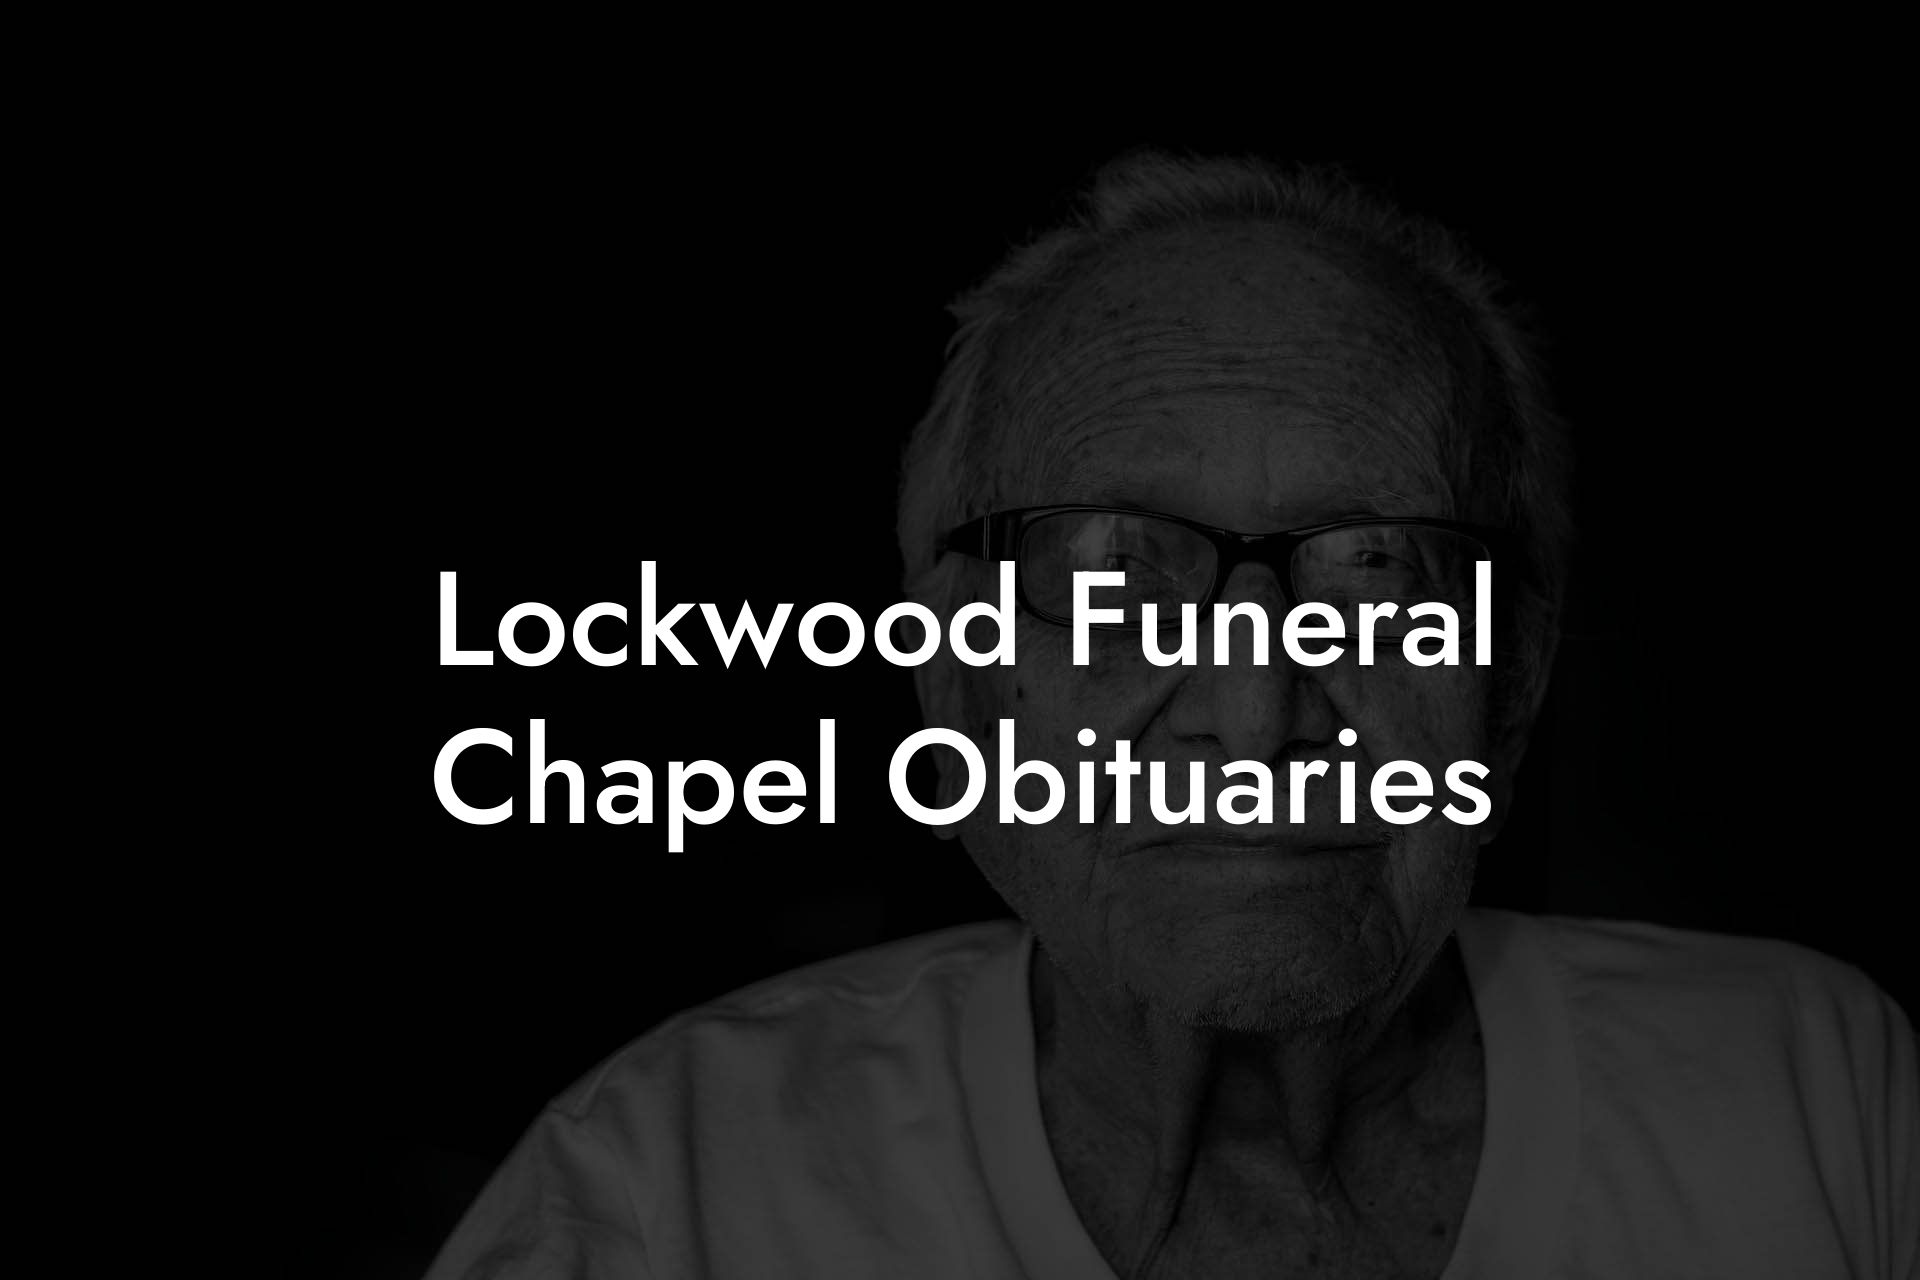 Lockwood Funeral Chapel Obituaries